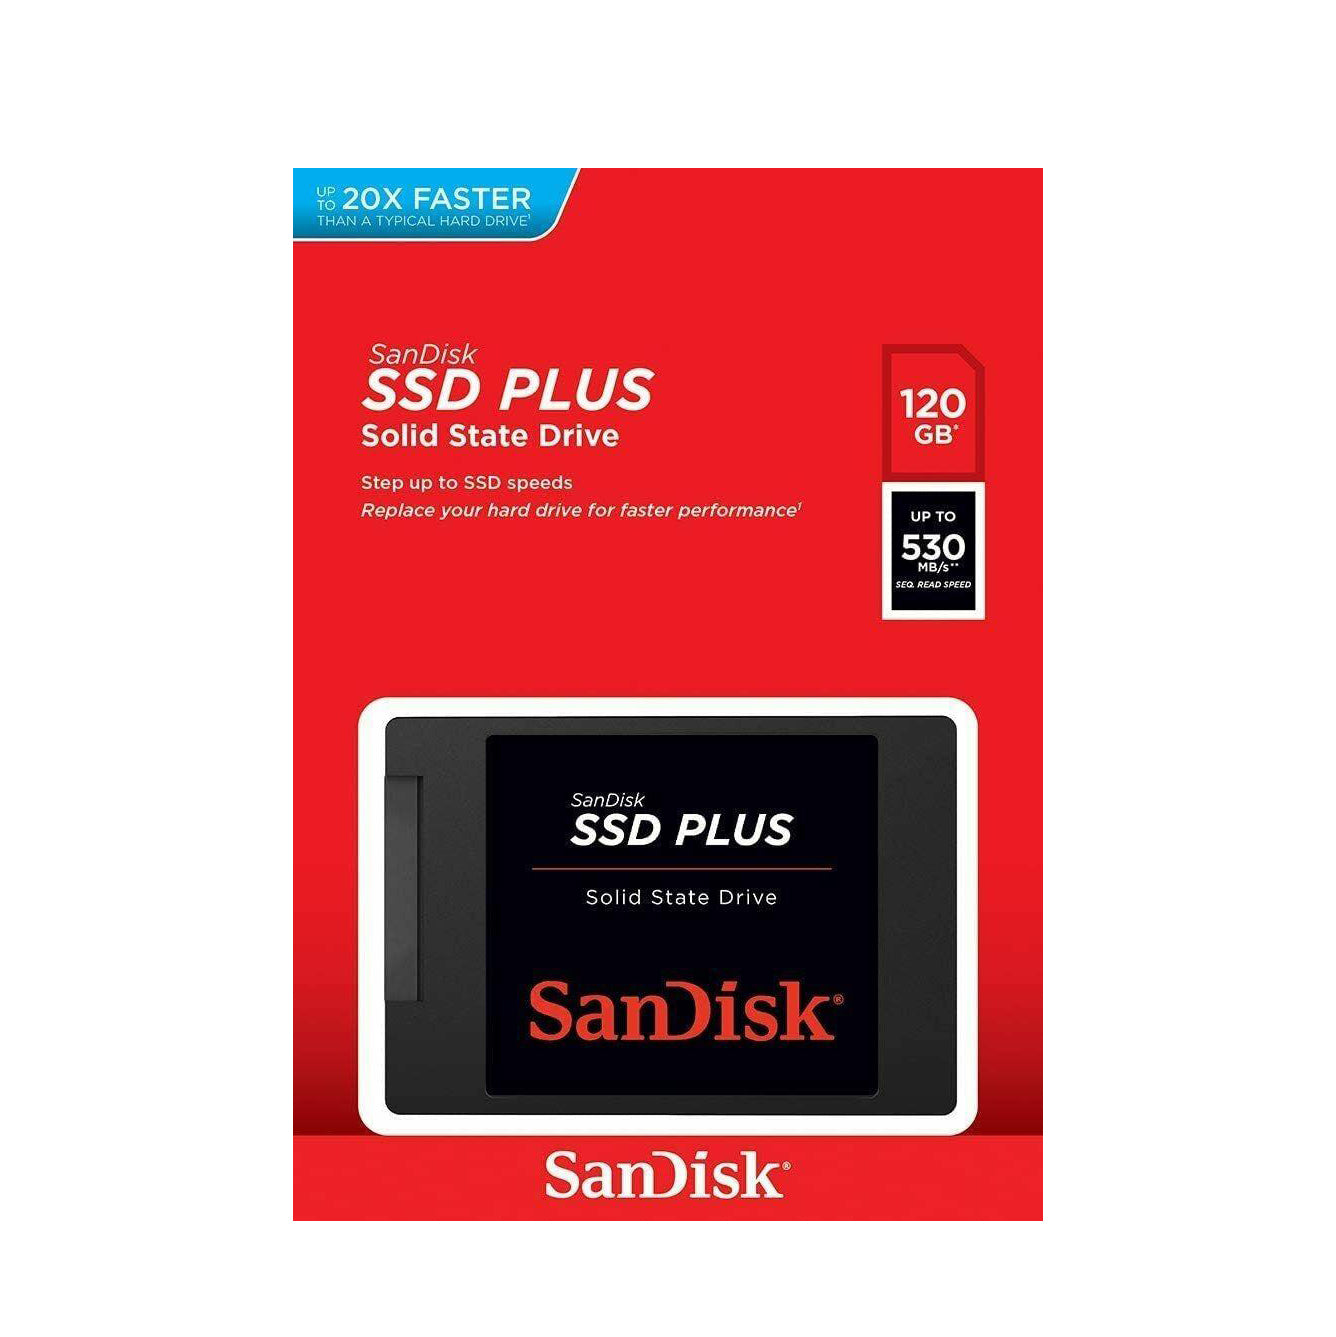 Sandisk SSD PLUS 20X Faster 530MB/s Read Speed 120GB